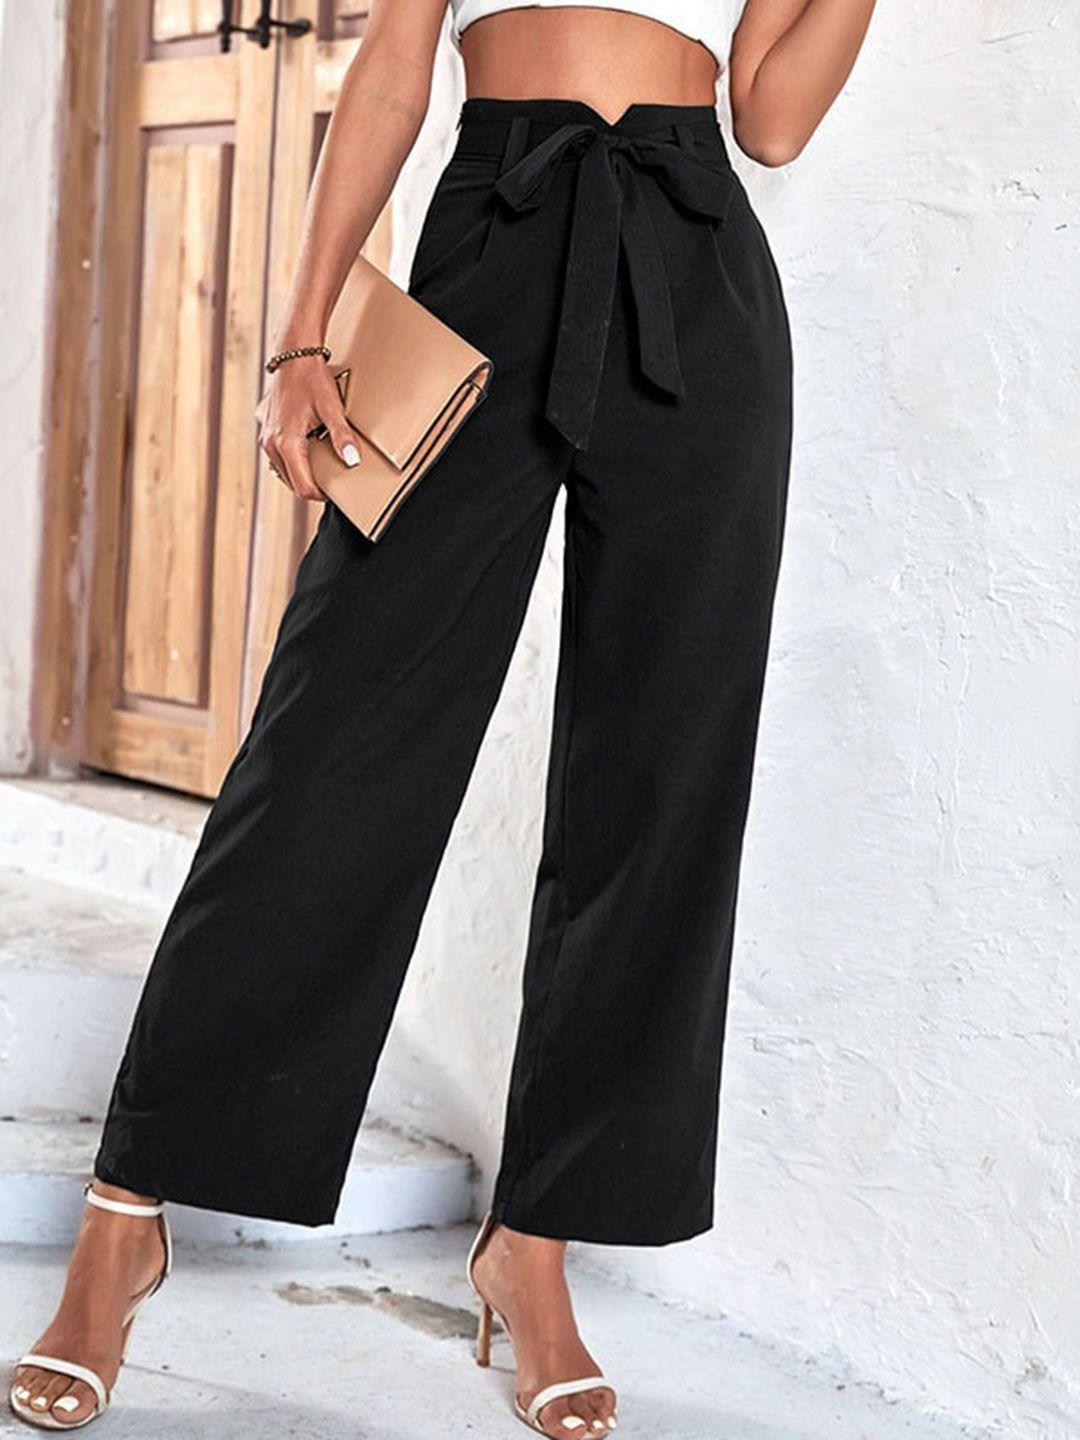 stylecast women black high-rise trousers